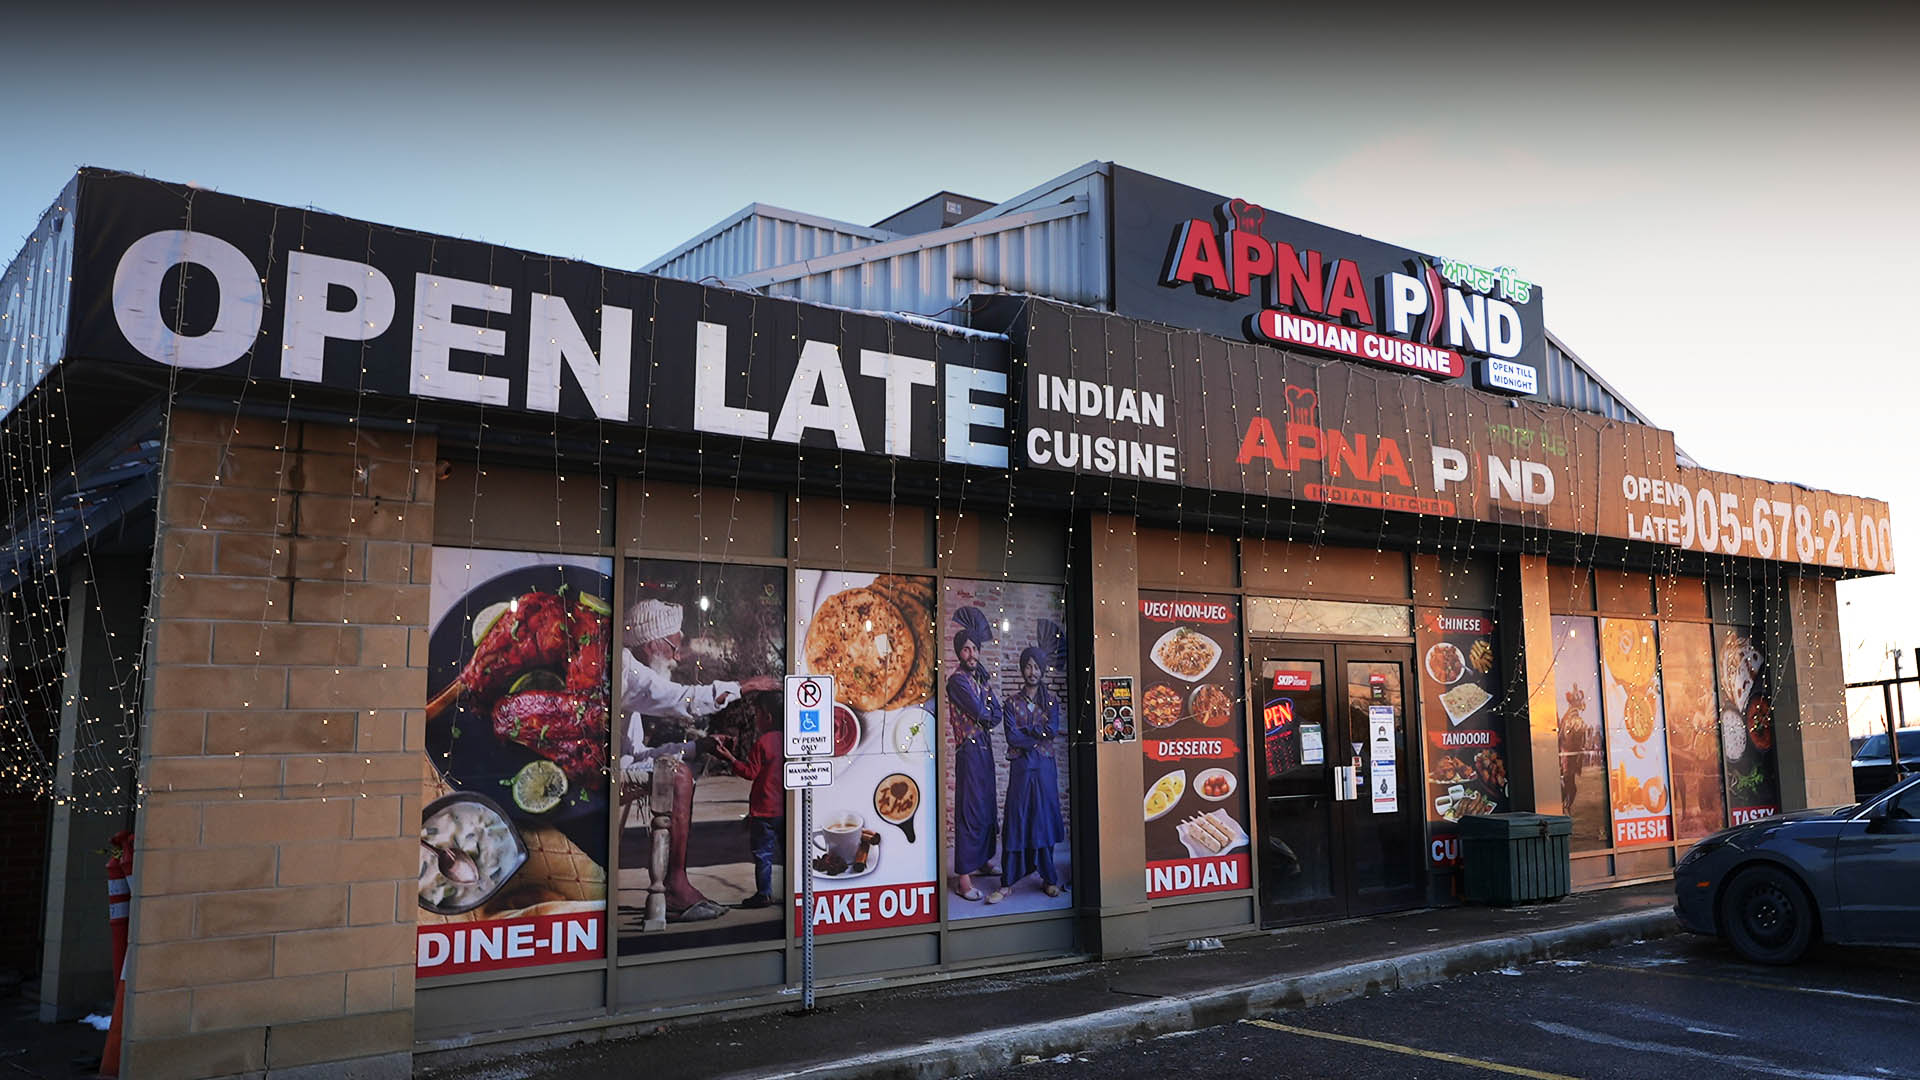 Apna Pind - Indian Restaurant in Mississauga